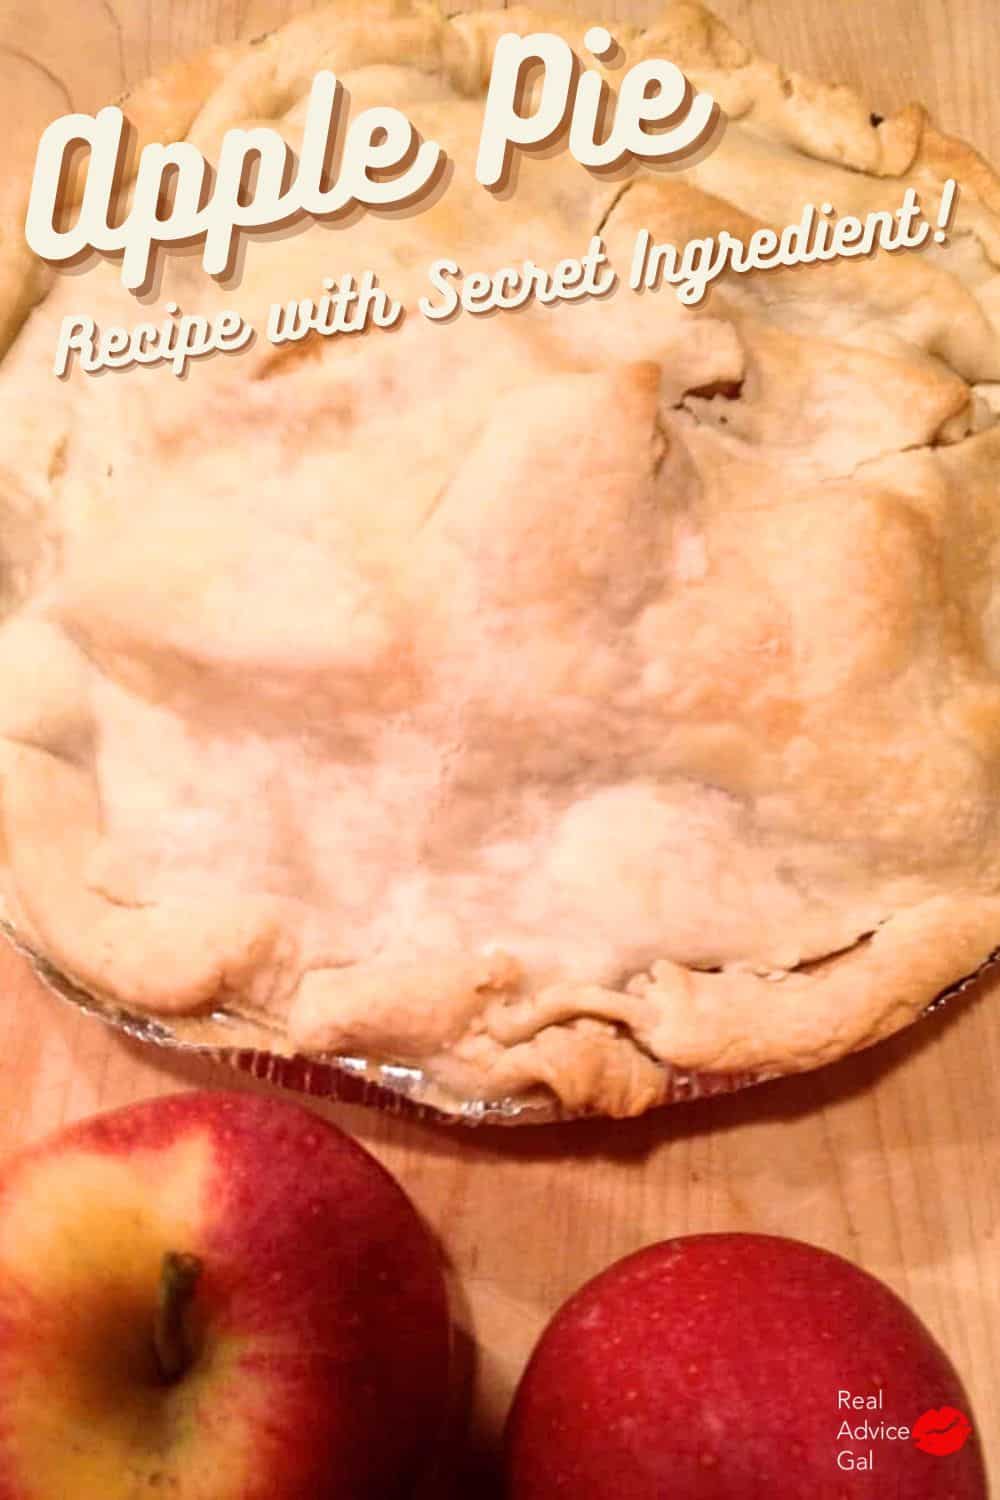 Apple pie recipe with secret ingredient